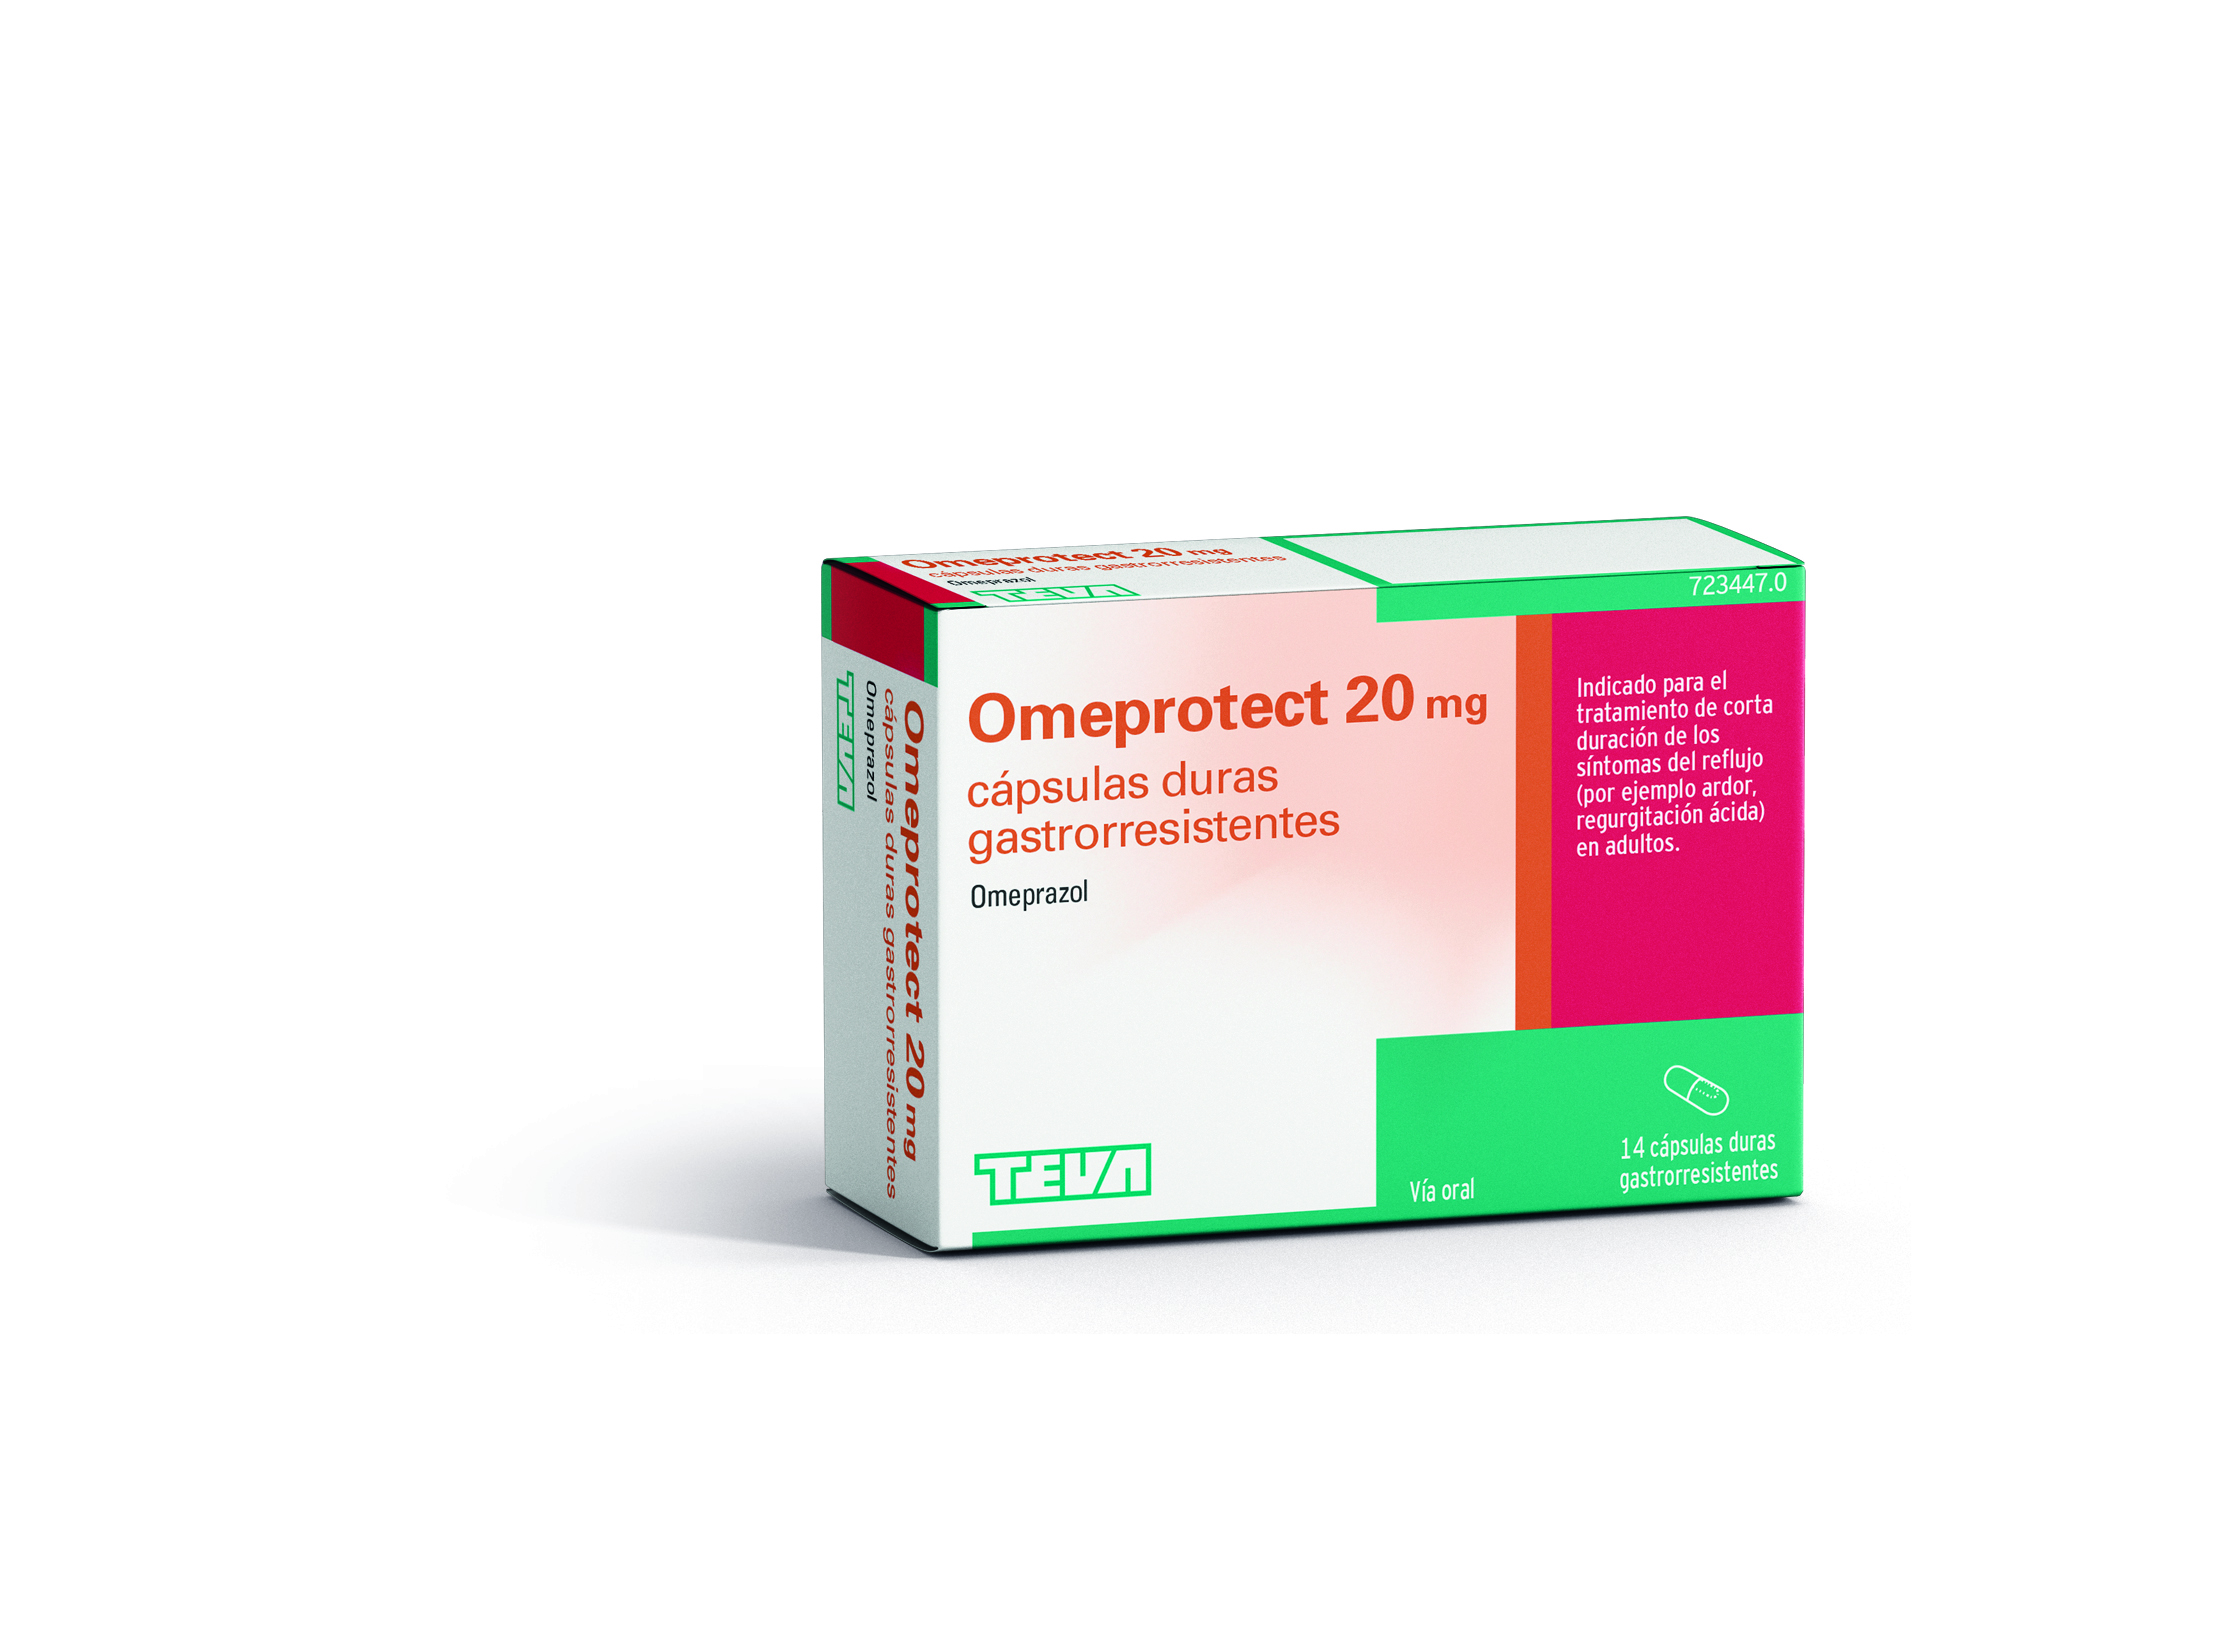 OMEPROTECT 20 mg CAPSULAS DURAS GASTRORRESISTENTES, 14 cápsulas blister